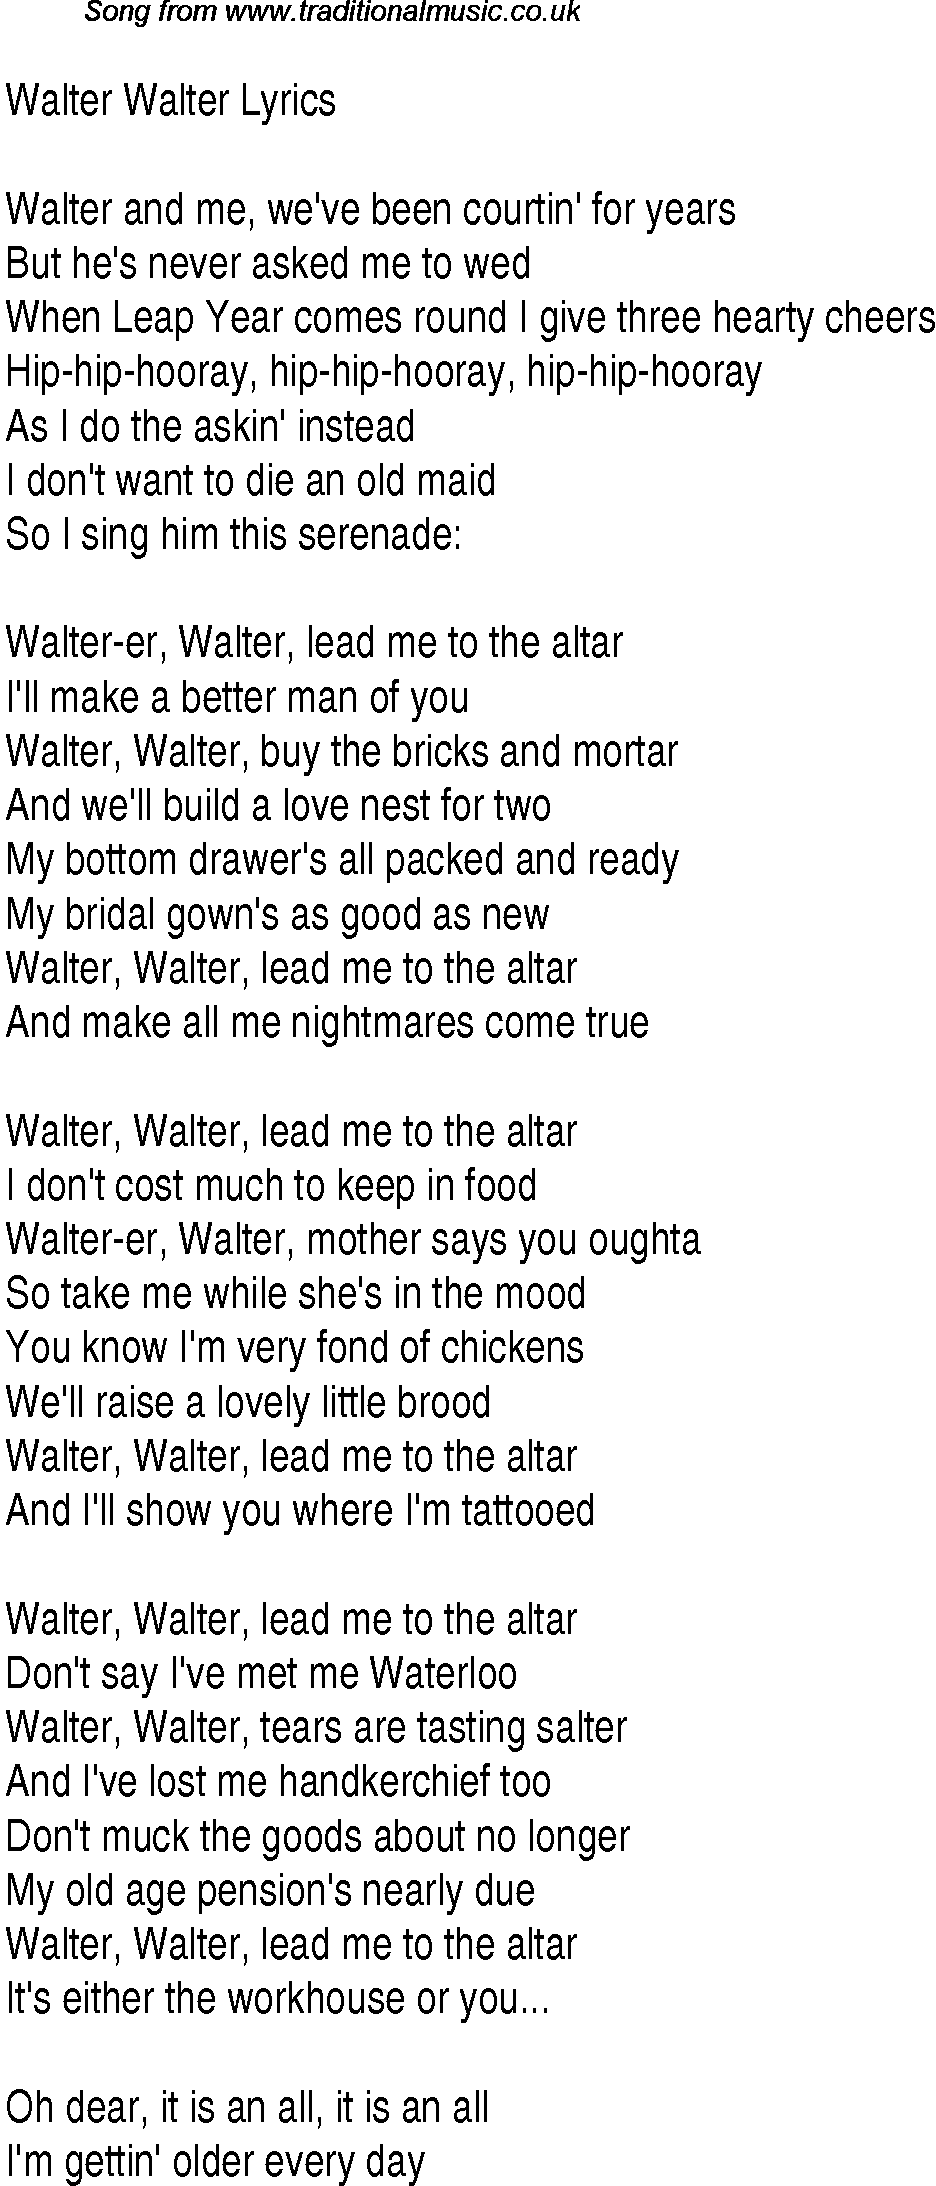 1940s top songs - lyrics for Walter Walter(Gracie Fields)